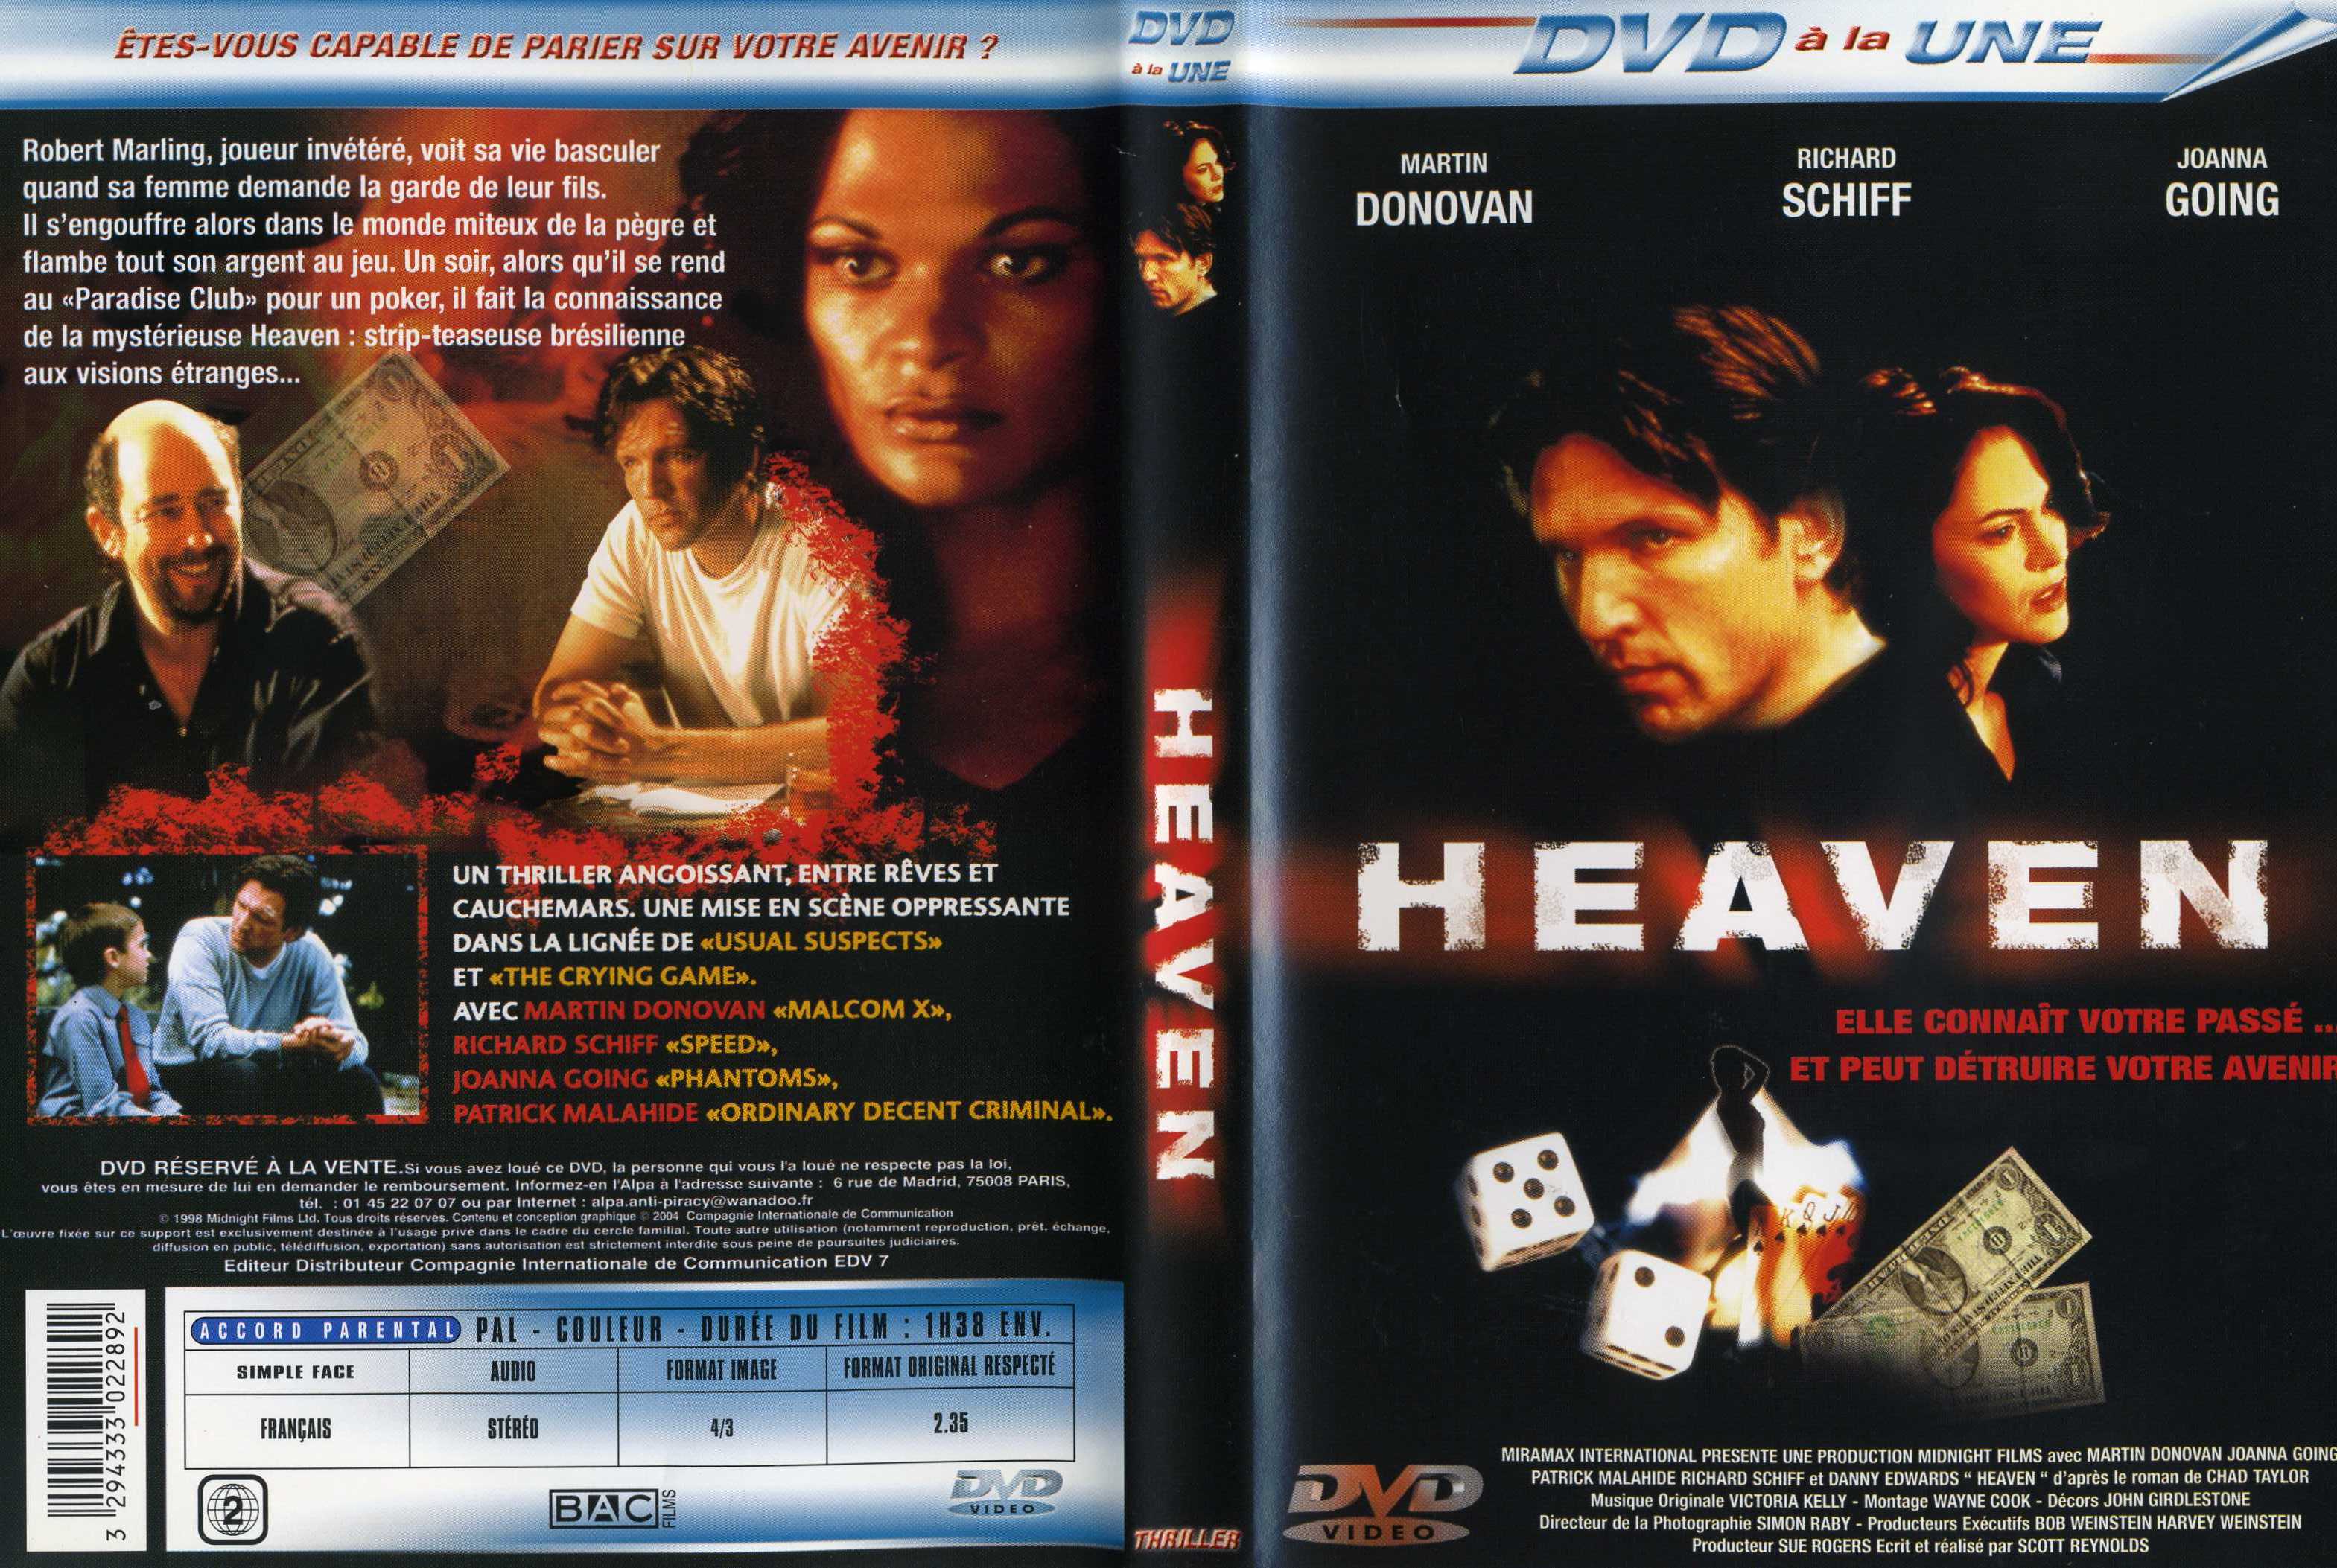 Jaquette DVD Heaven (1998)